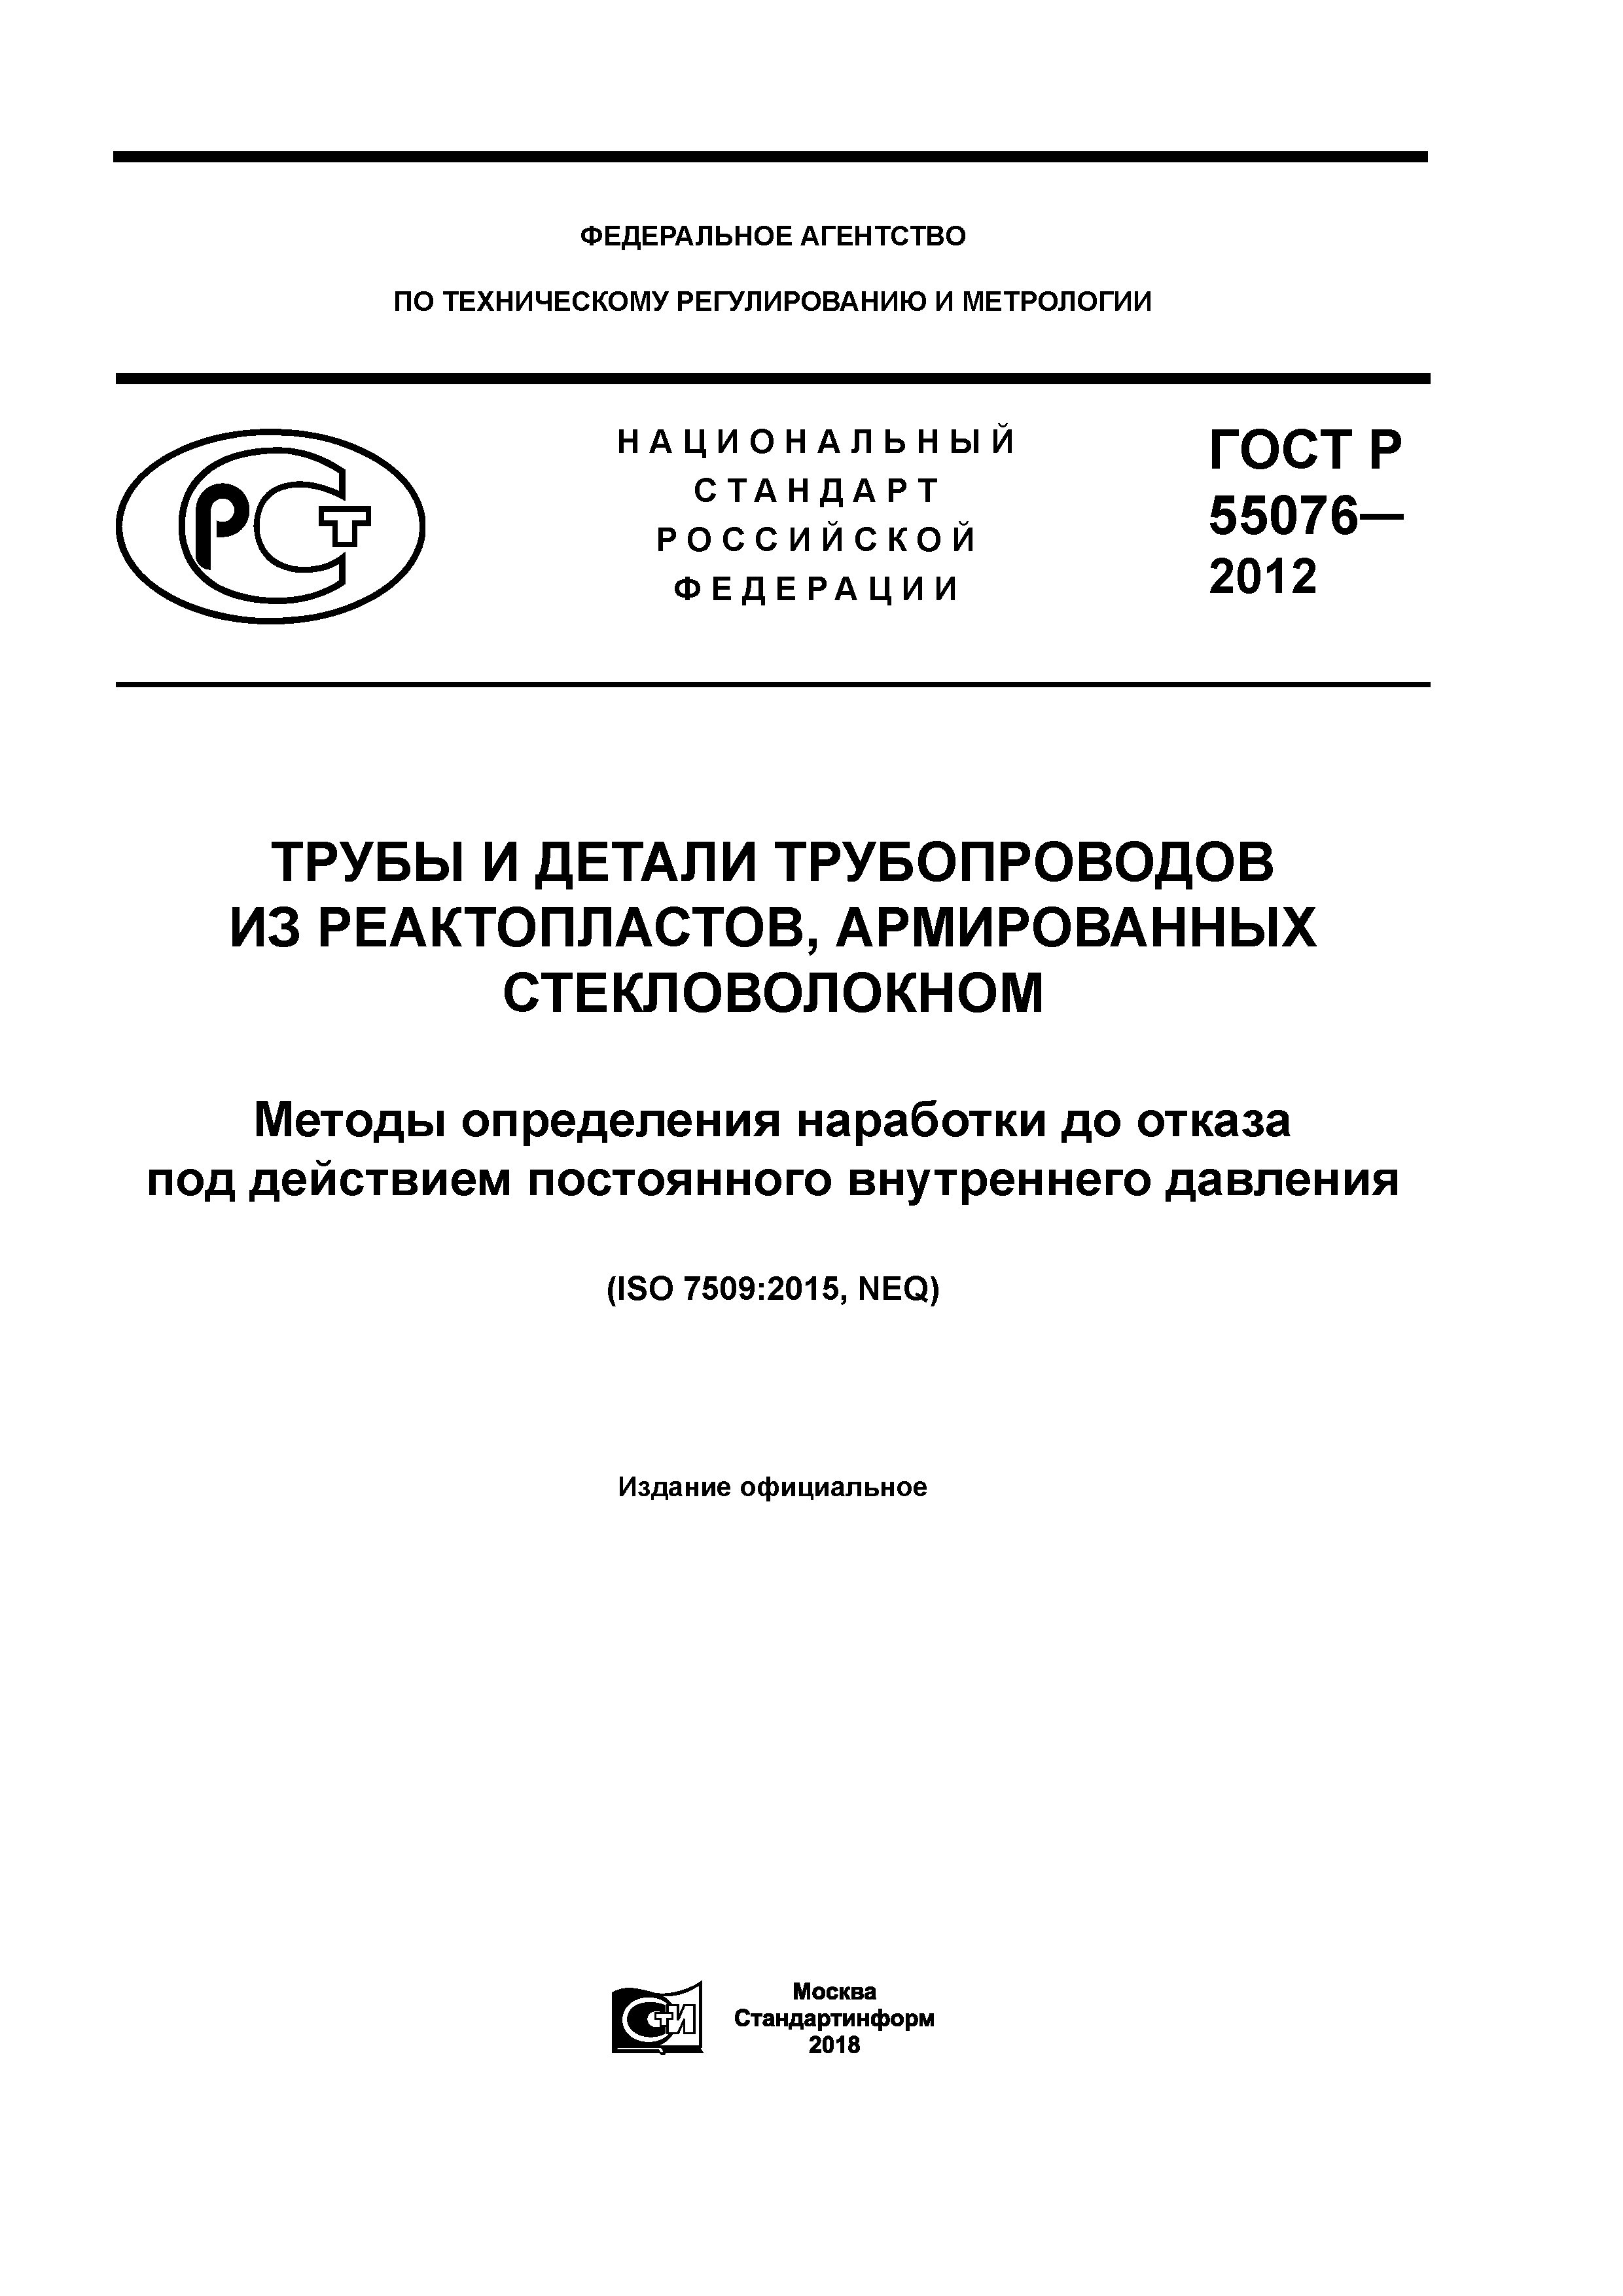 ГОСТ Р 55076-2012